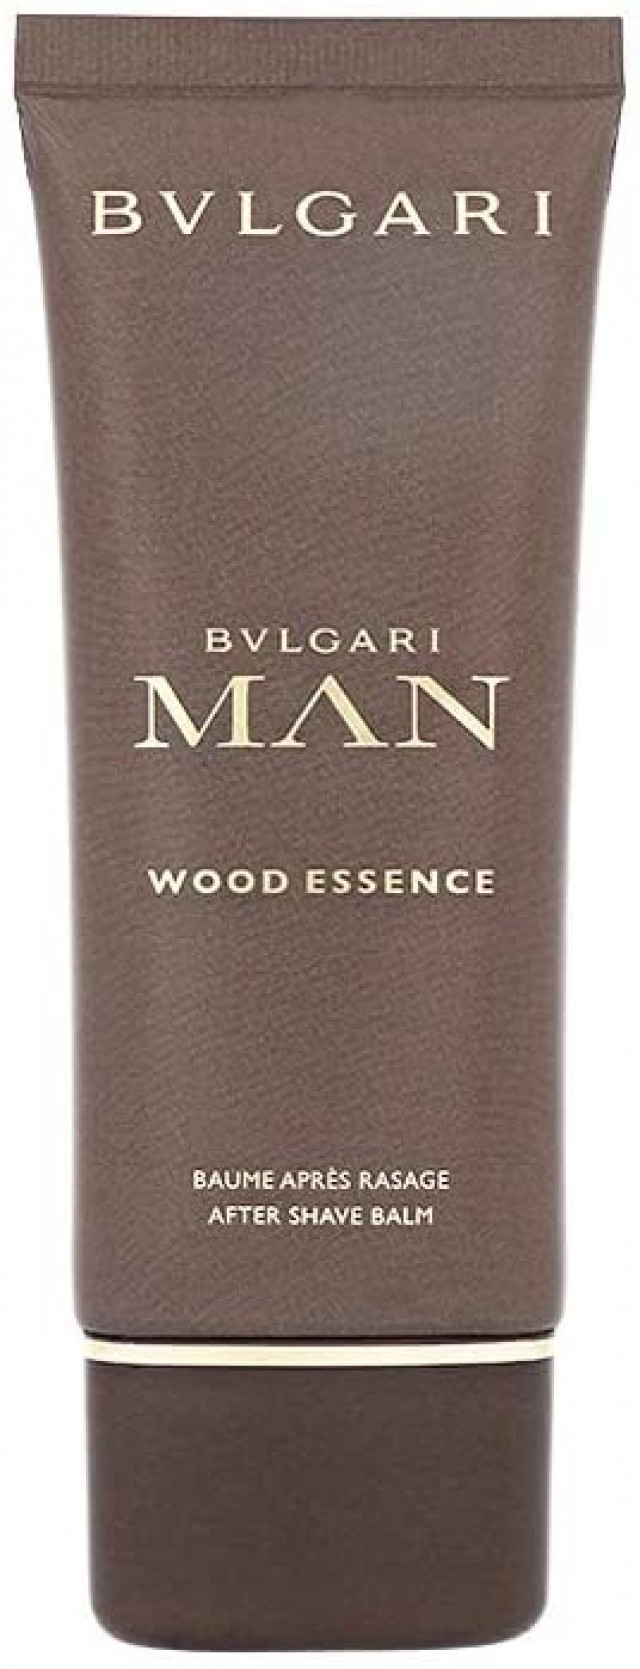 Man wood essence